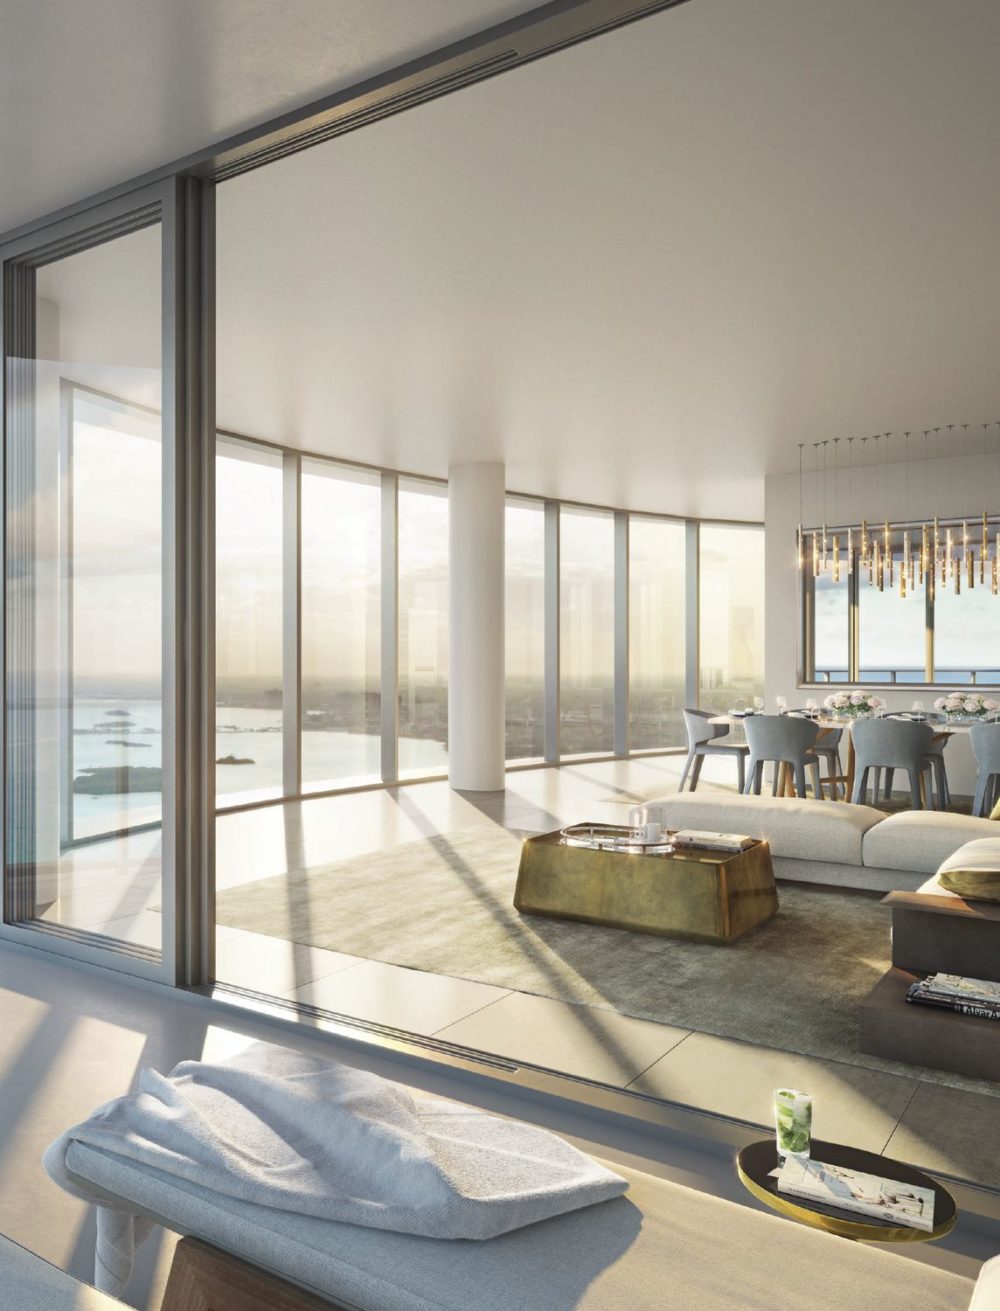 The Ritz-Carlton Residences, Sunny Isles Beach features a signature curvilinear silhouette